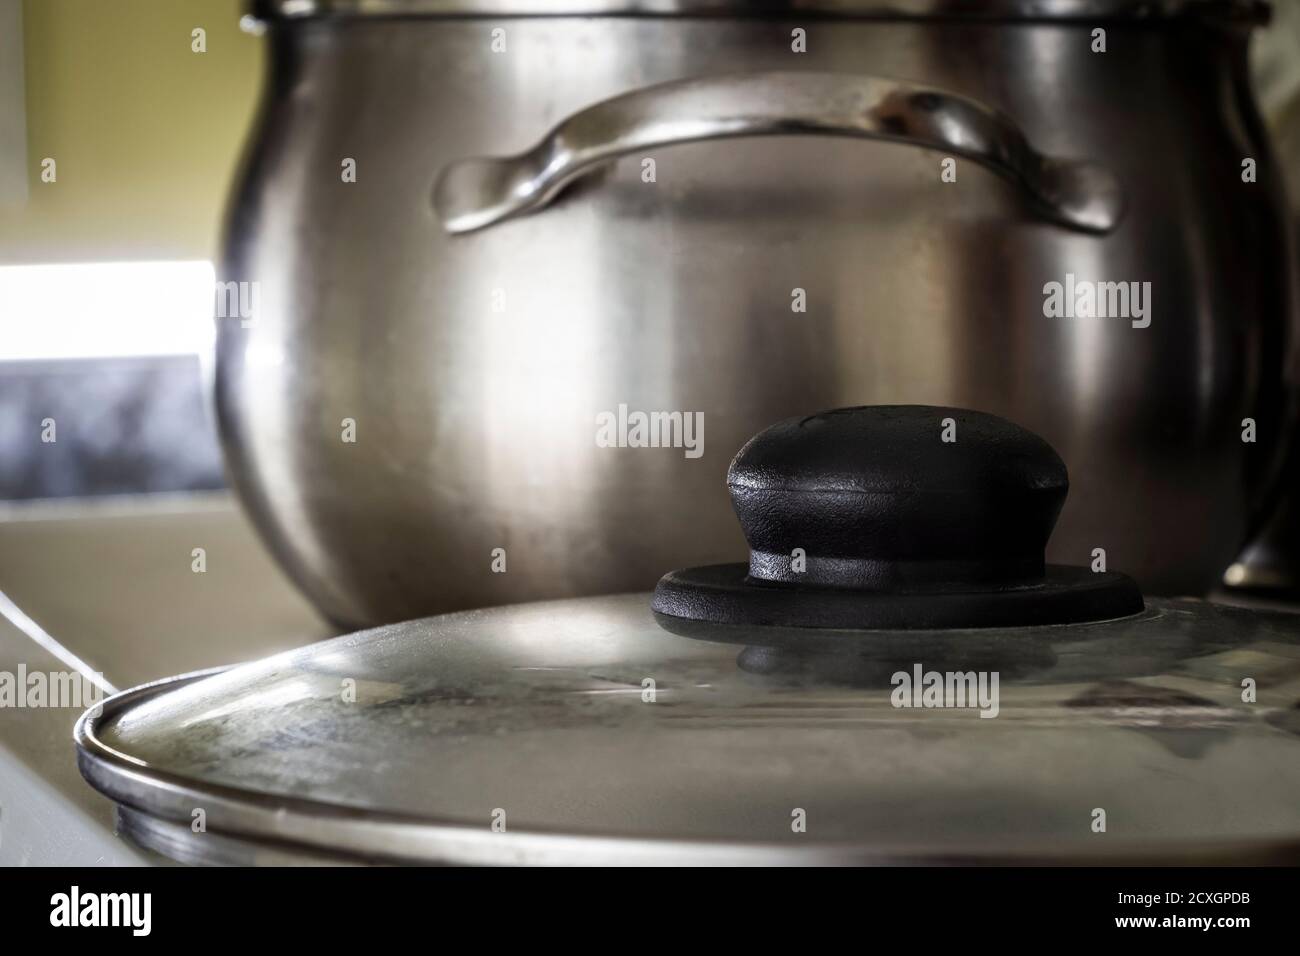 https://c8.alamy.com/comp/2CXGPDB/shiny-stainless-steel-saucepan-on-the-kitchen-sink-2CXGPDB.jpg